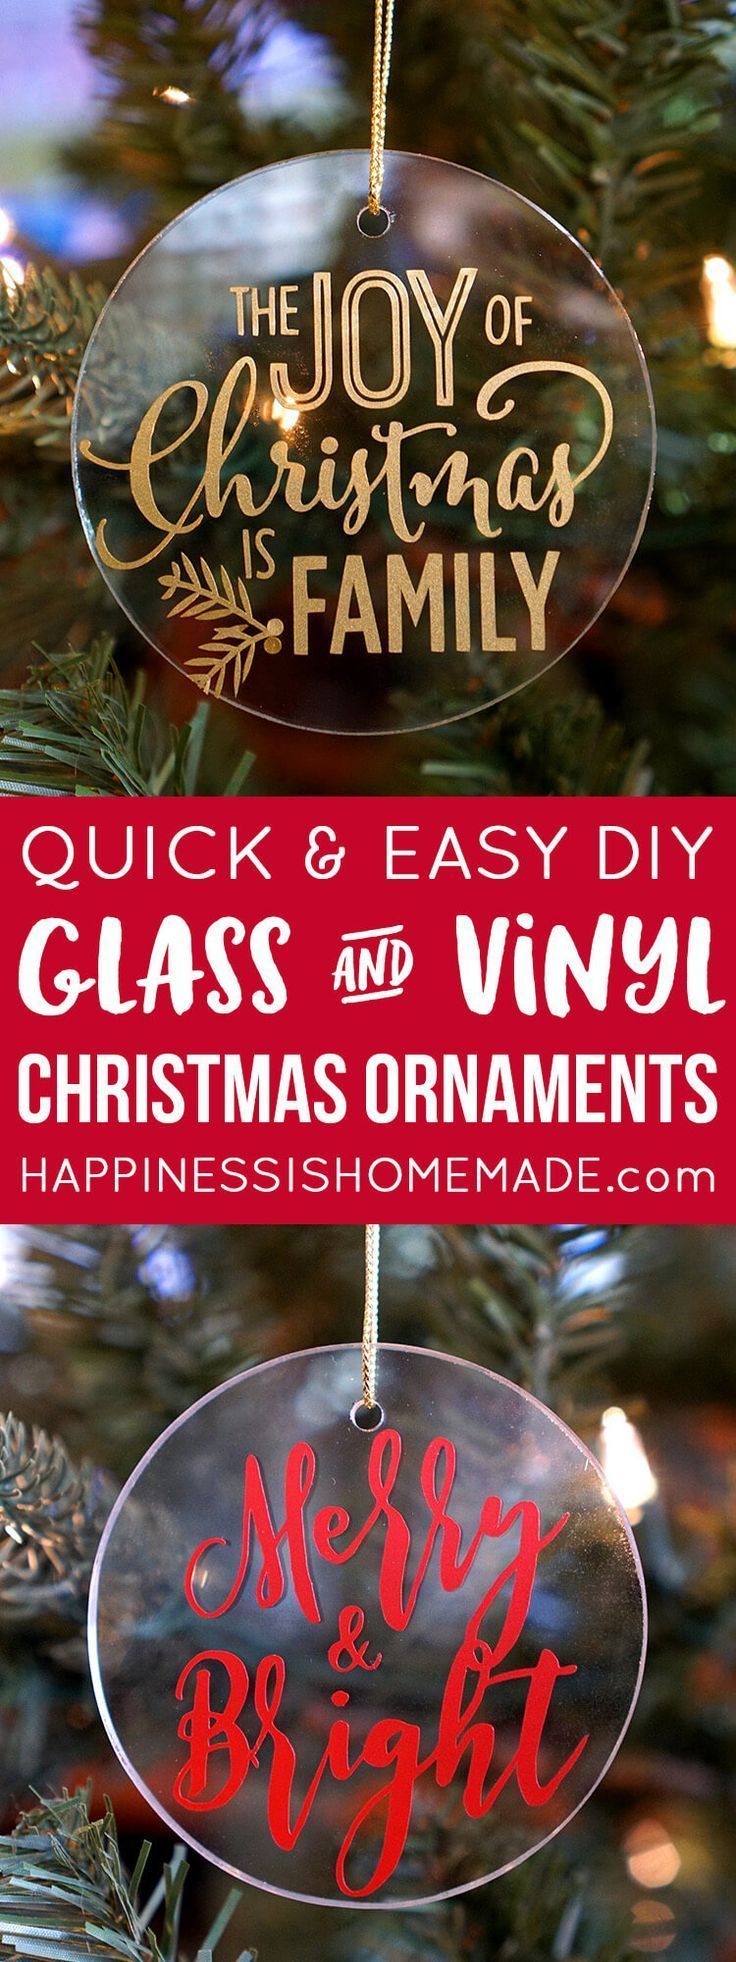 Easy Glass & Vinyl Christmas Ornaments - Easy Glass & Vinyl Christmas Ornaments -   17 diy Christmas esferas ideas